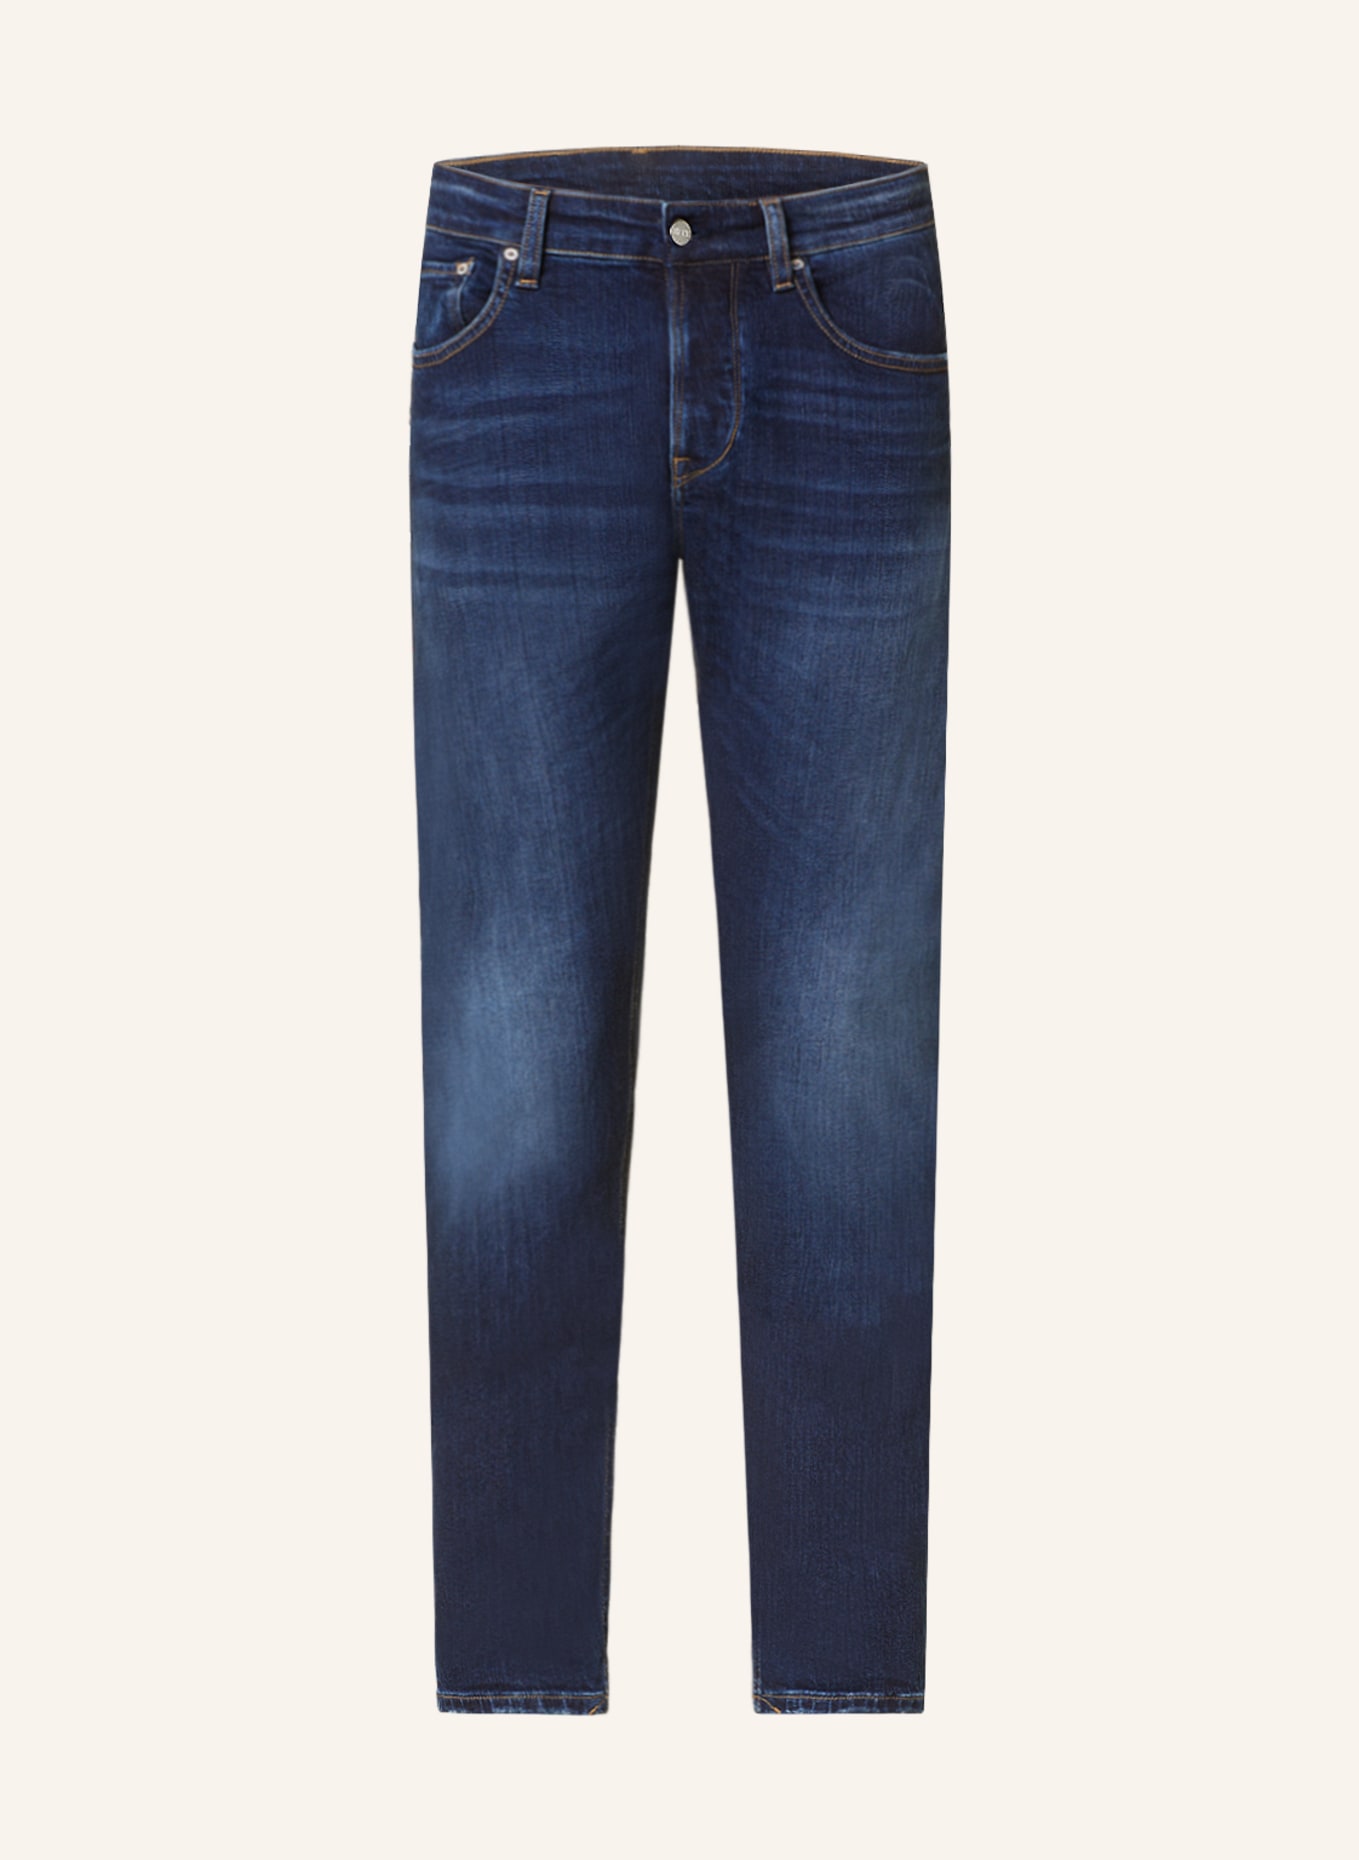 THE.NIM STANDARD Jeans MORRISON tapered fit, Color: W608-ODK ORGANIC DARK (Image 1)